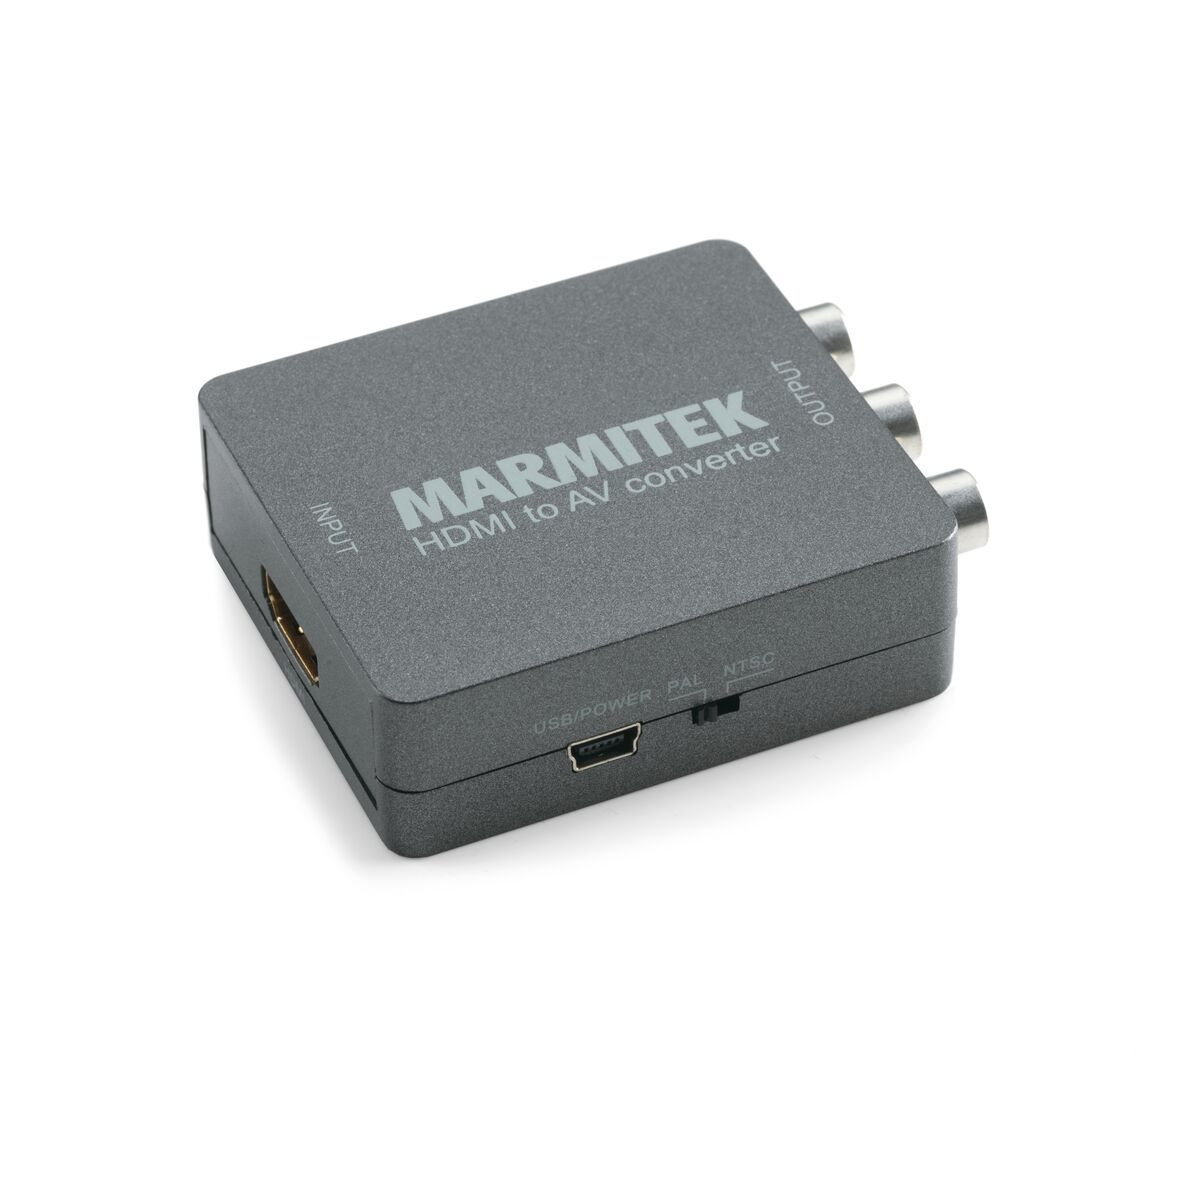 Marmitek Connect HA13 (HDMI-naar-RCA) Converter Zwart